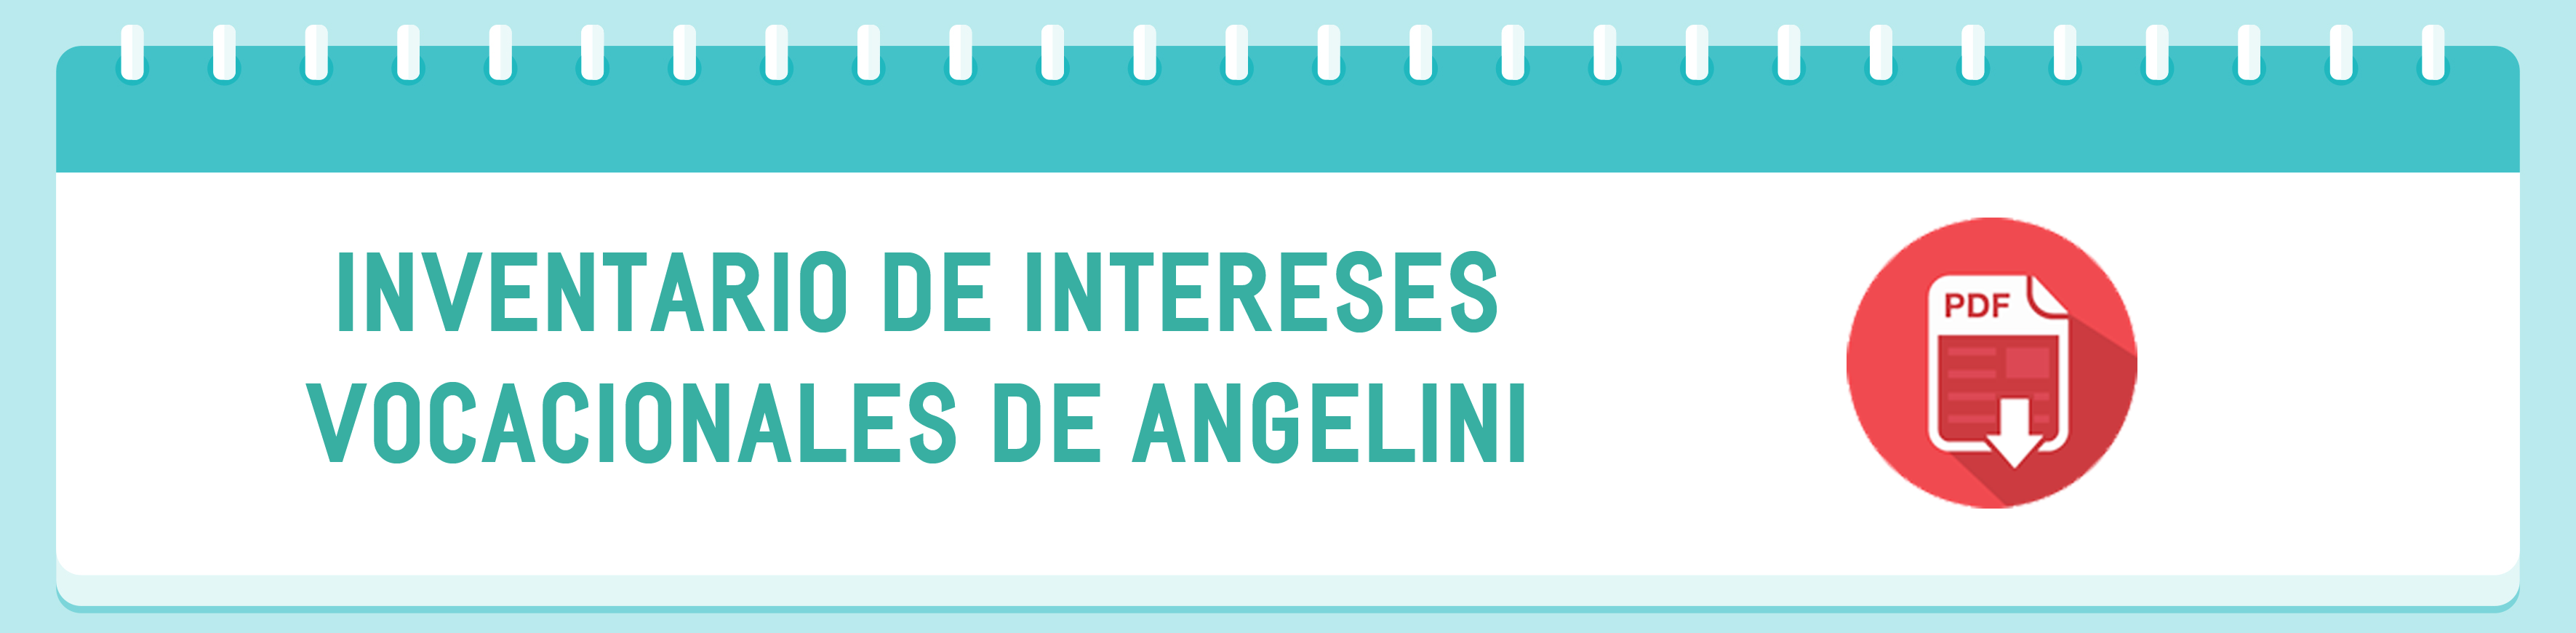 inventario_intereses_vocacionales_angelini_pdf.png